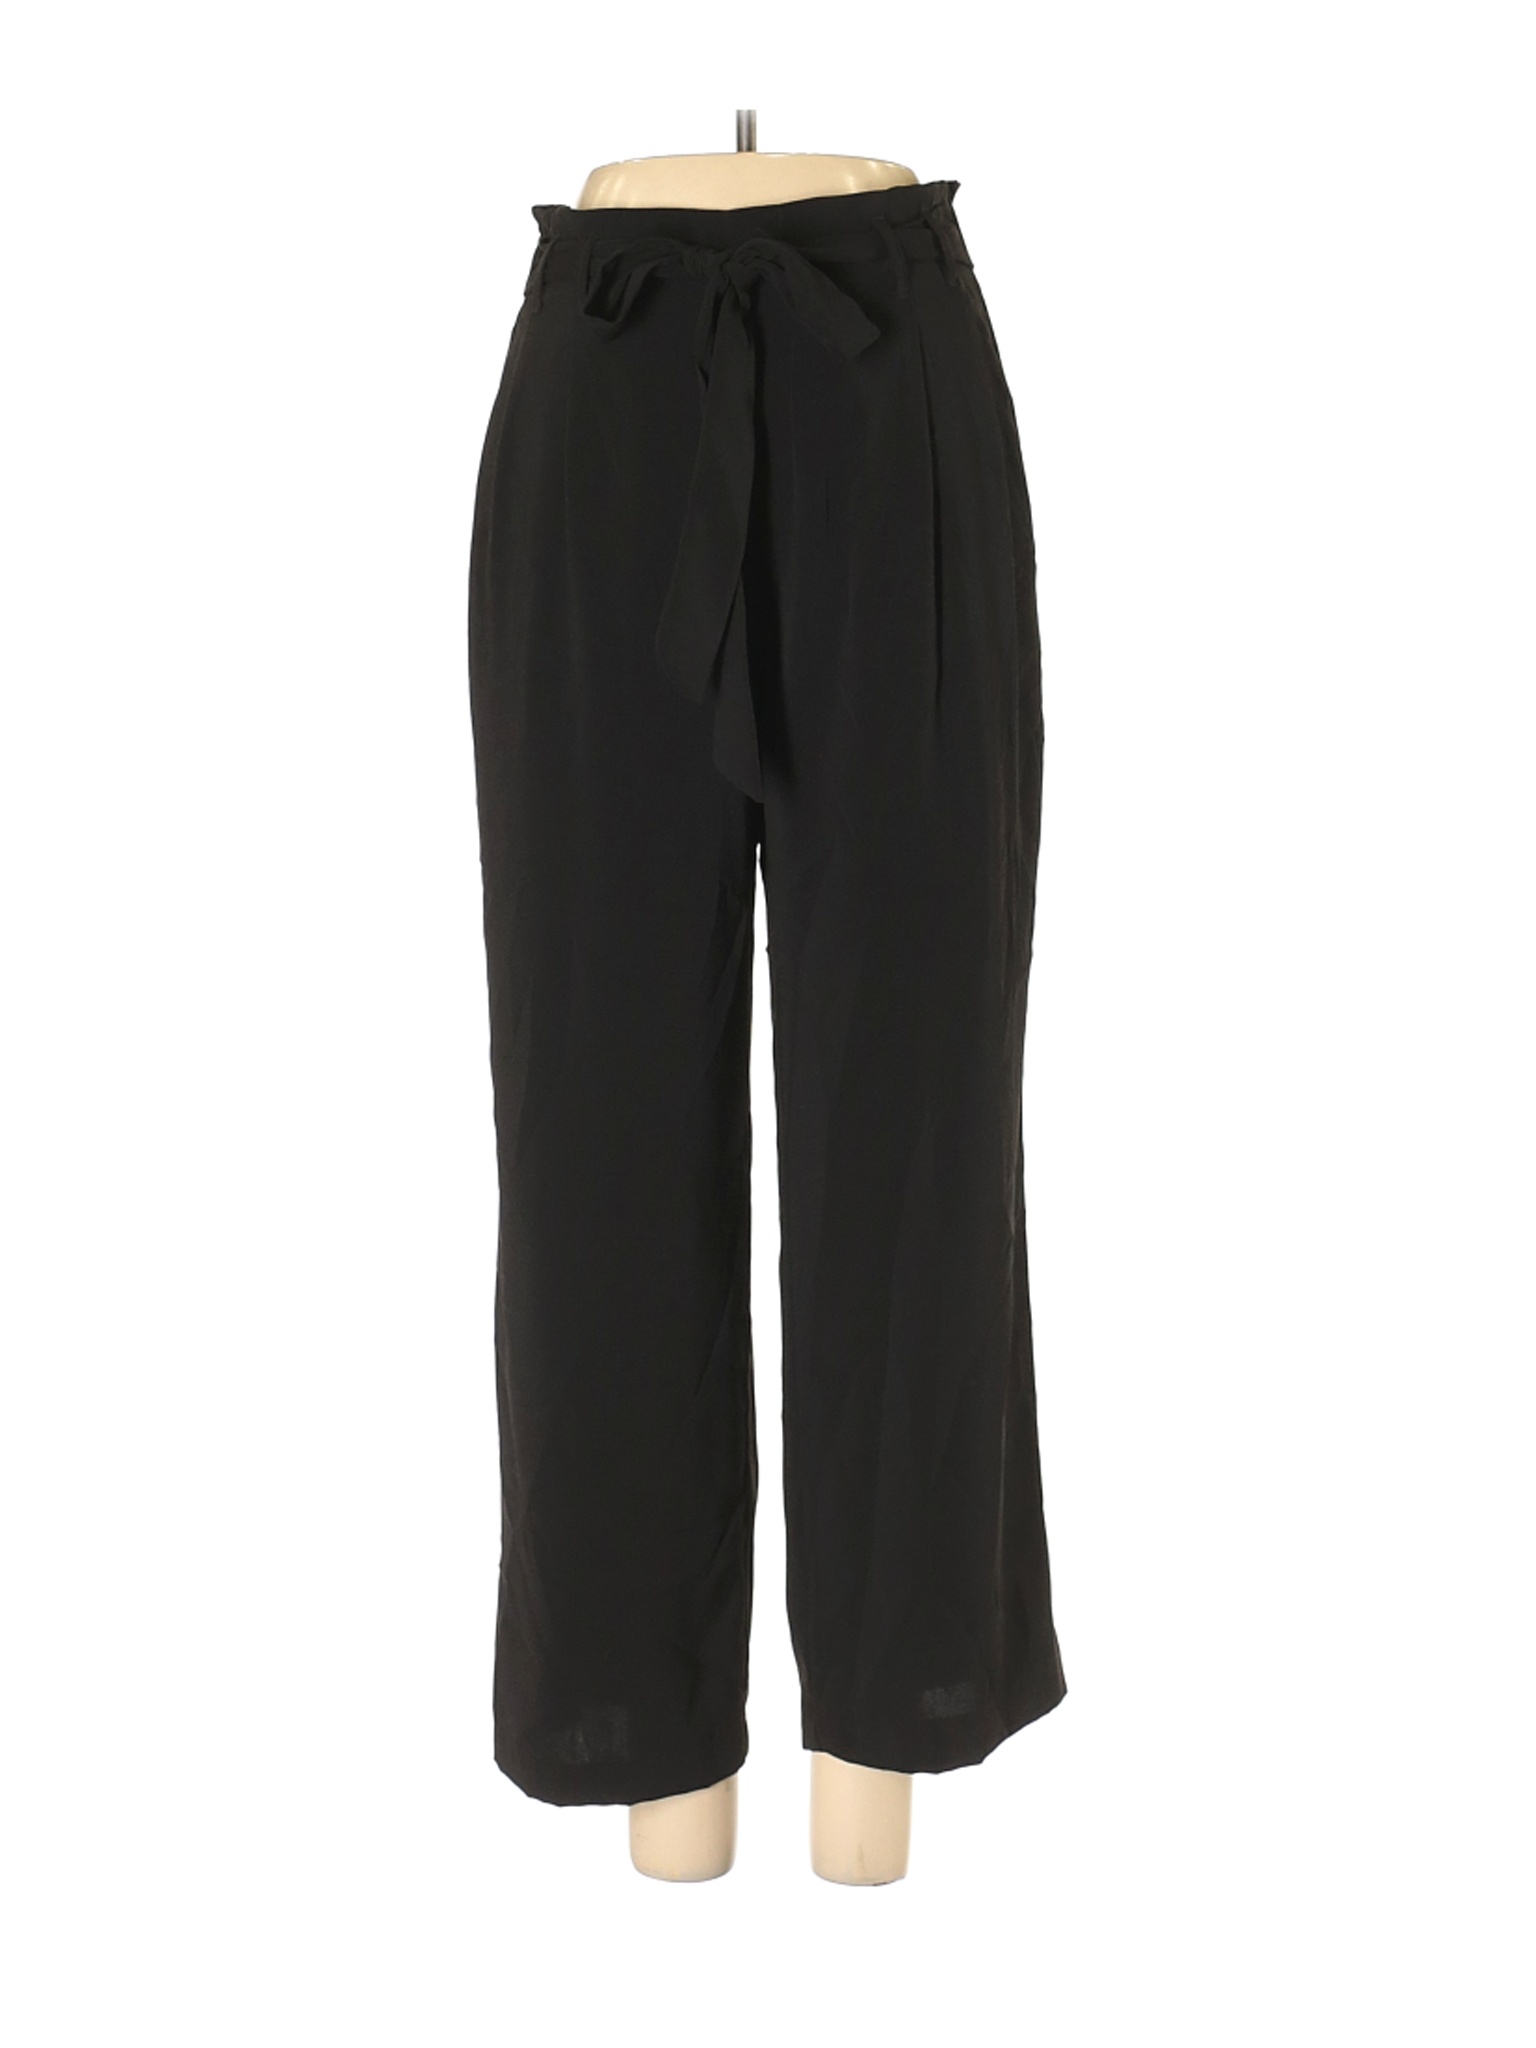 Trafaluc by Zara Women Black Casual Pants S | eBay